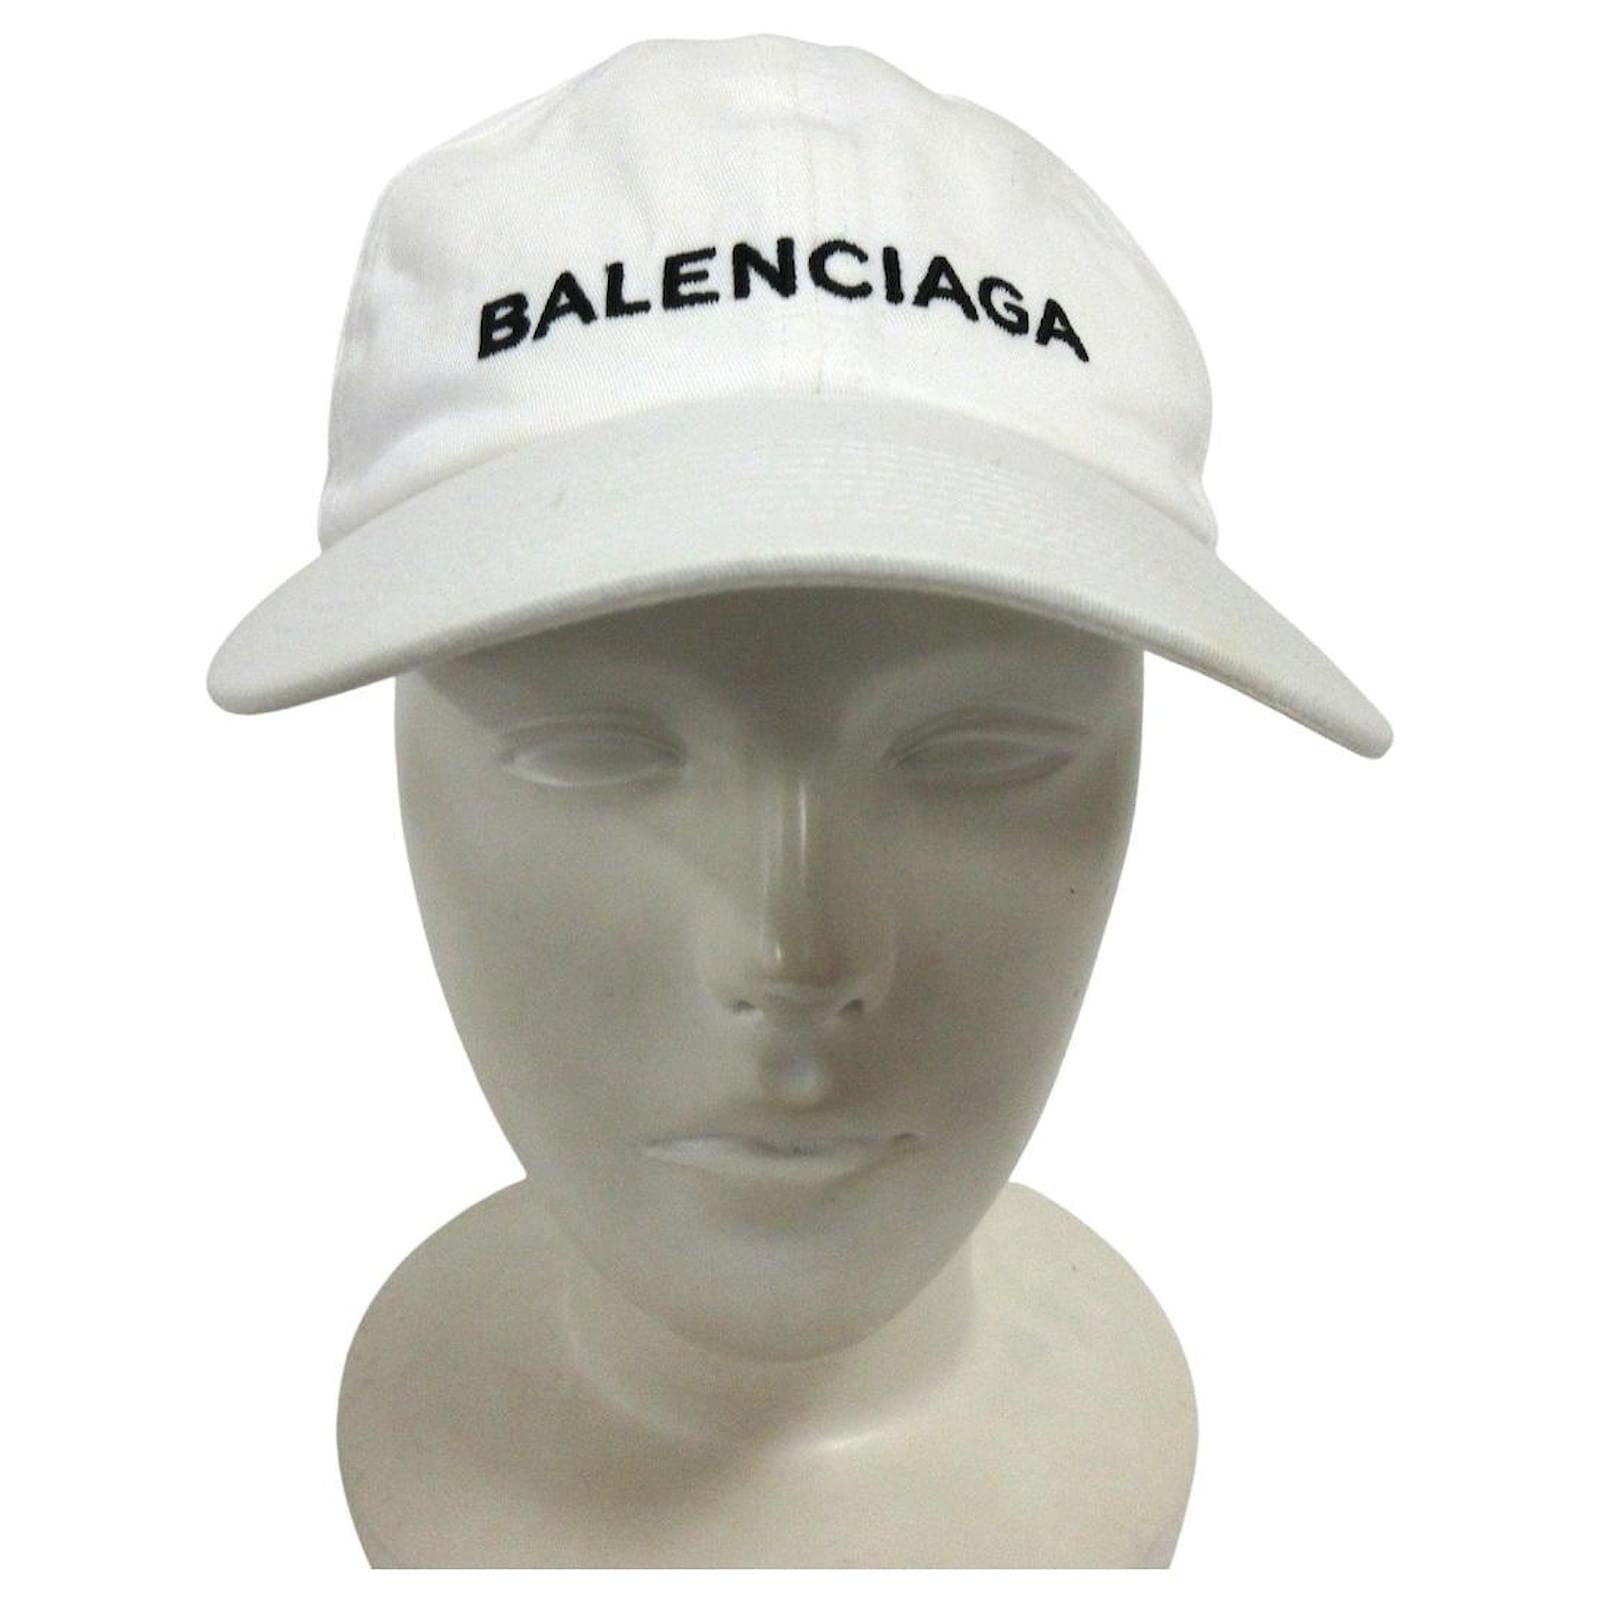 Legit check on this Balenciaga cap  rLegitCheck